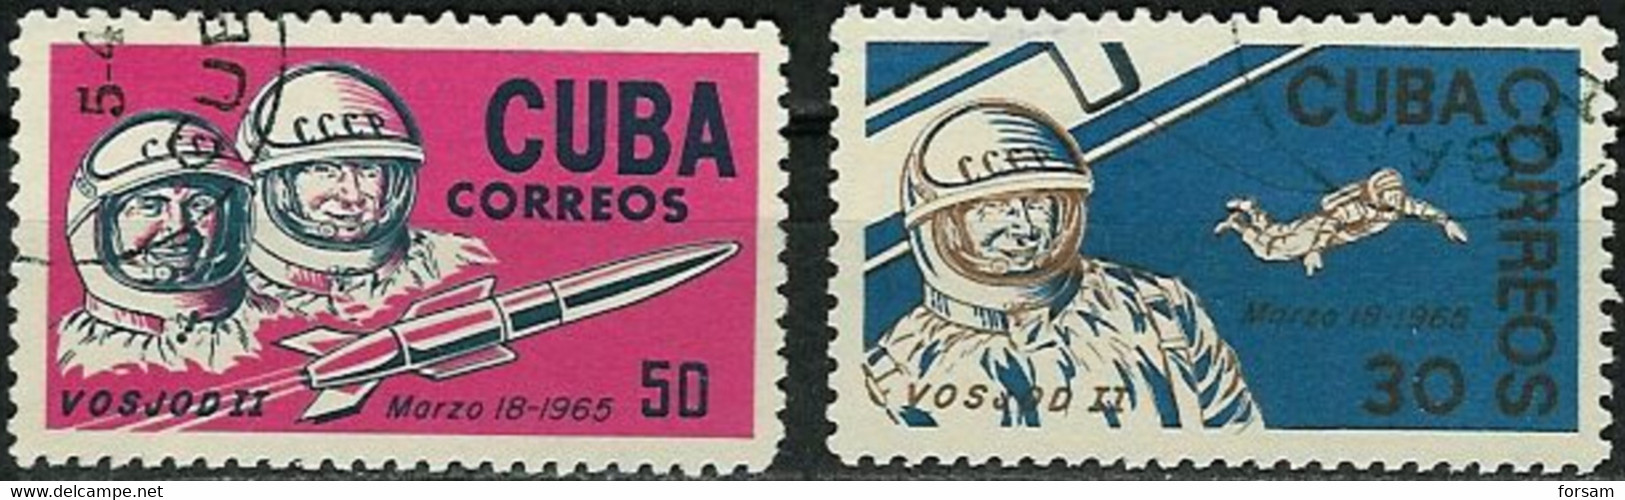 CUBA..1965..Michel # 1008-1009..used...MiCV - 2.60 Euro. - Gebruikt